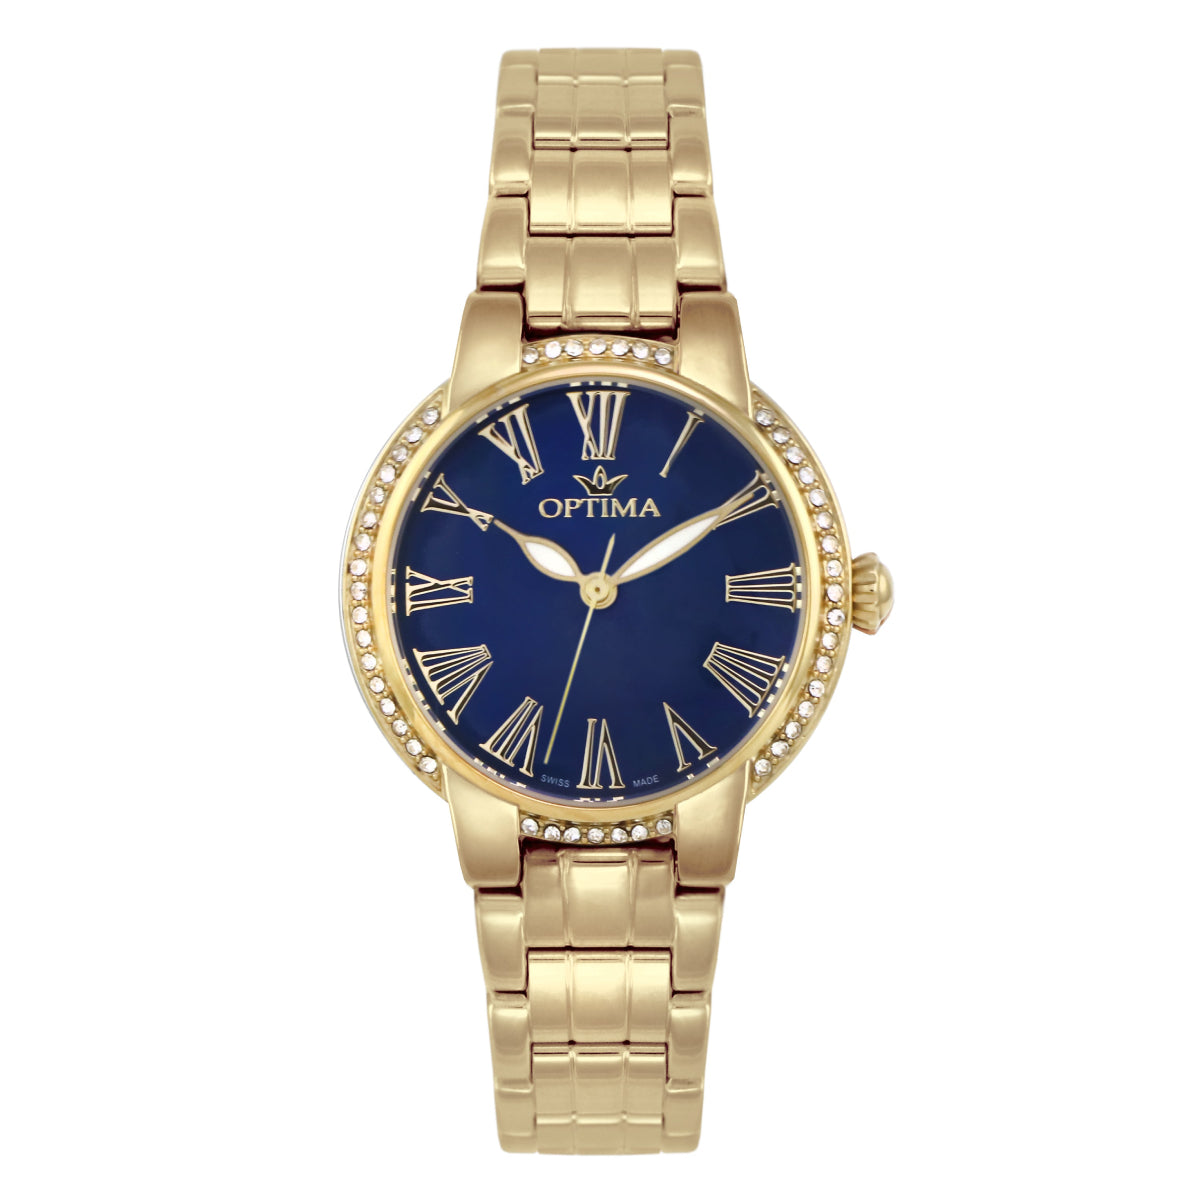 Optima Women's Swiss Quartz Watch with Blue Dial - OPT-0025